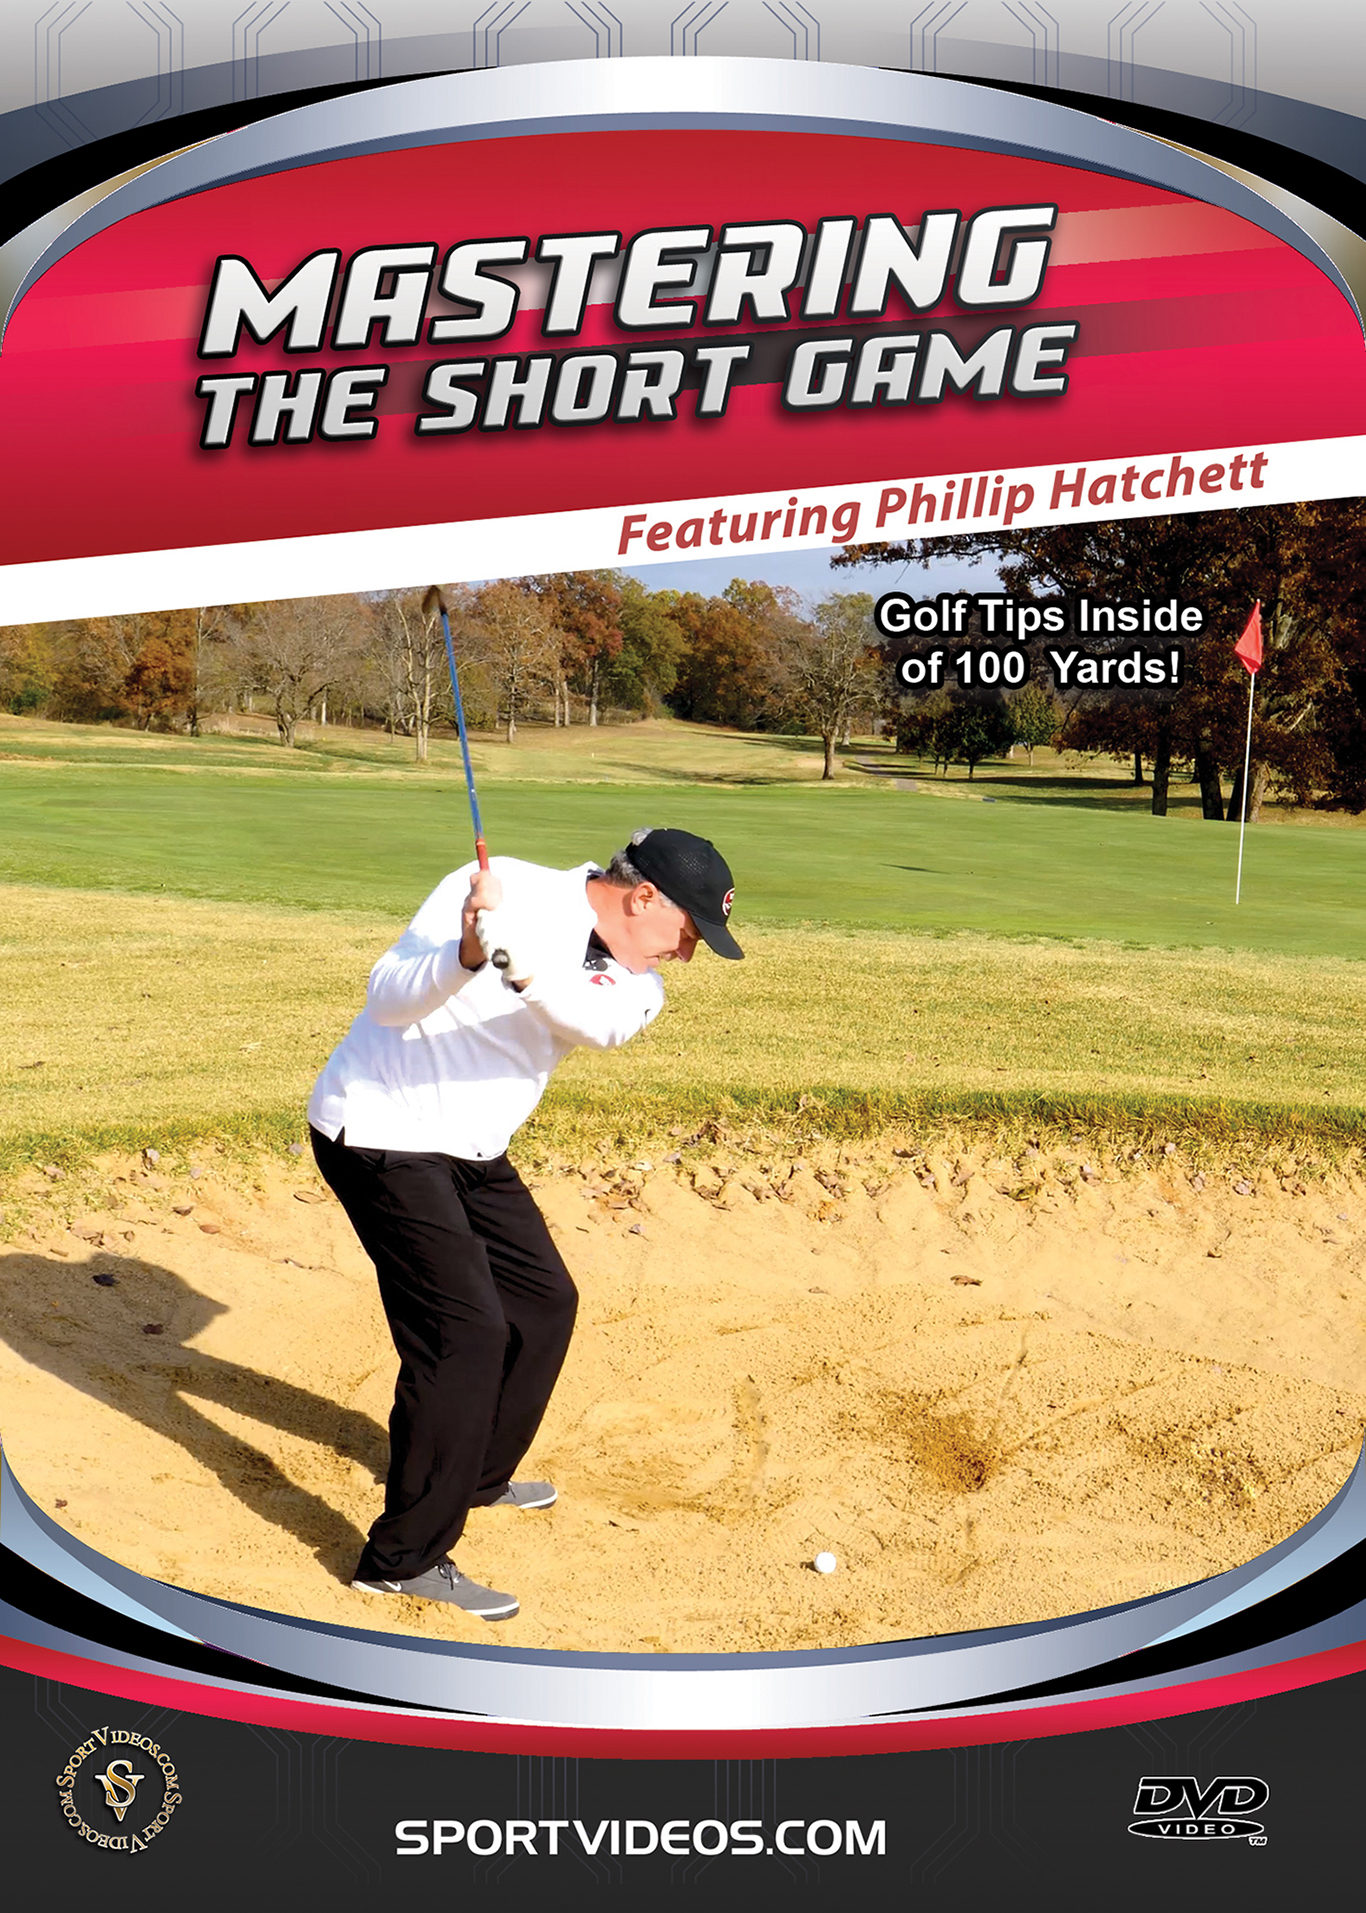 Mastering The Short Game - Golf Tips Inside 100 Yards! DVD or Download